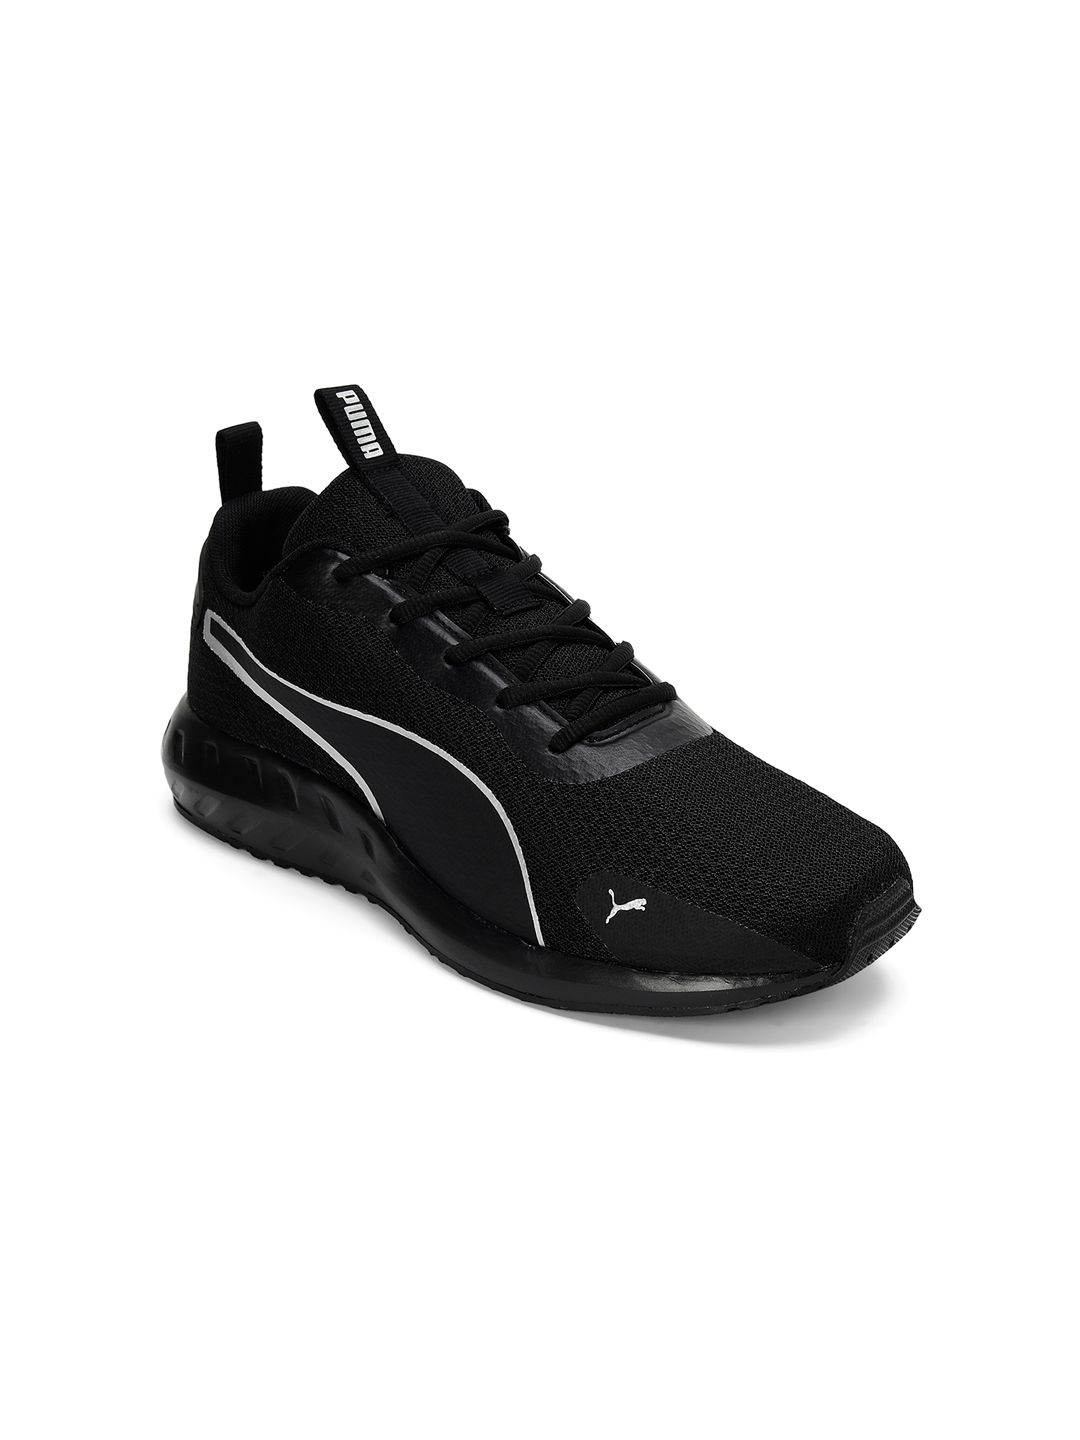 PUMA RS-Z LTH Sneakers For Men - Buy PUMA RS-Z LTH Sneakers For Men Online  at Best Price - Shop Online for Footwears in India | Flipkart.com